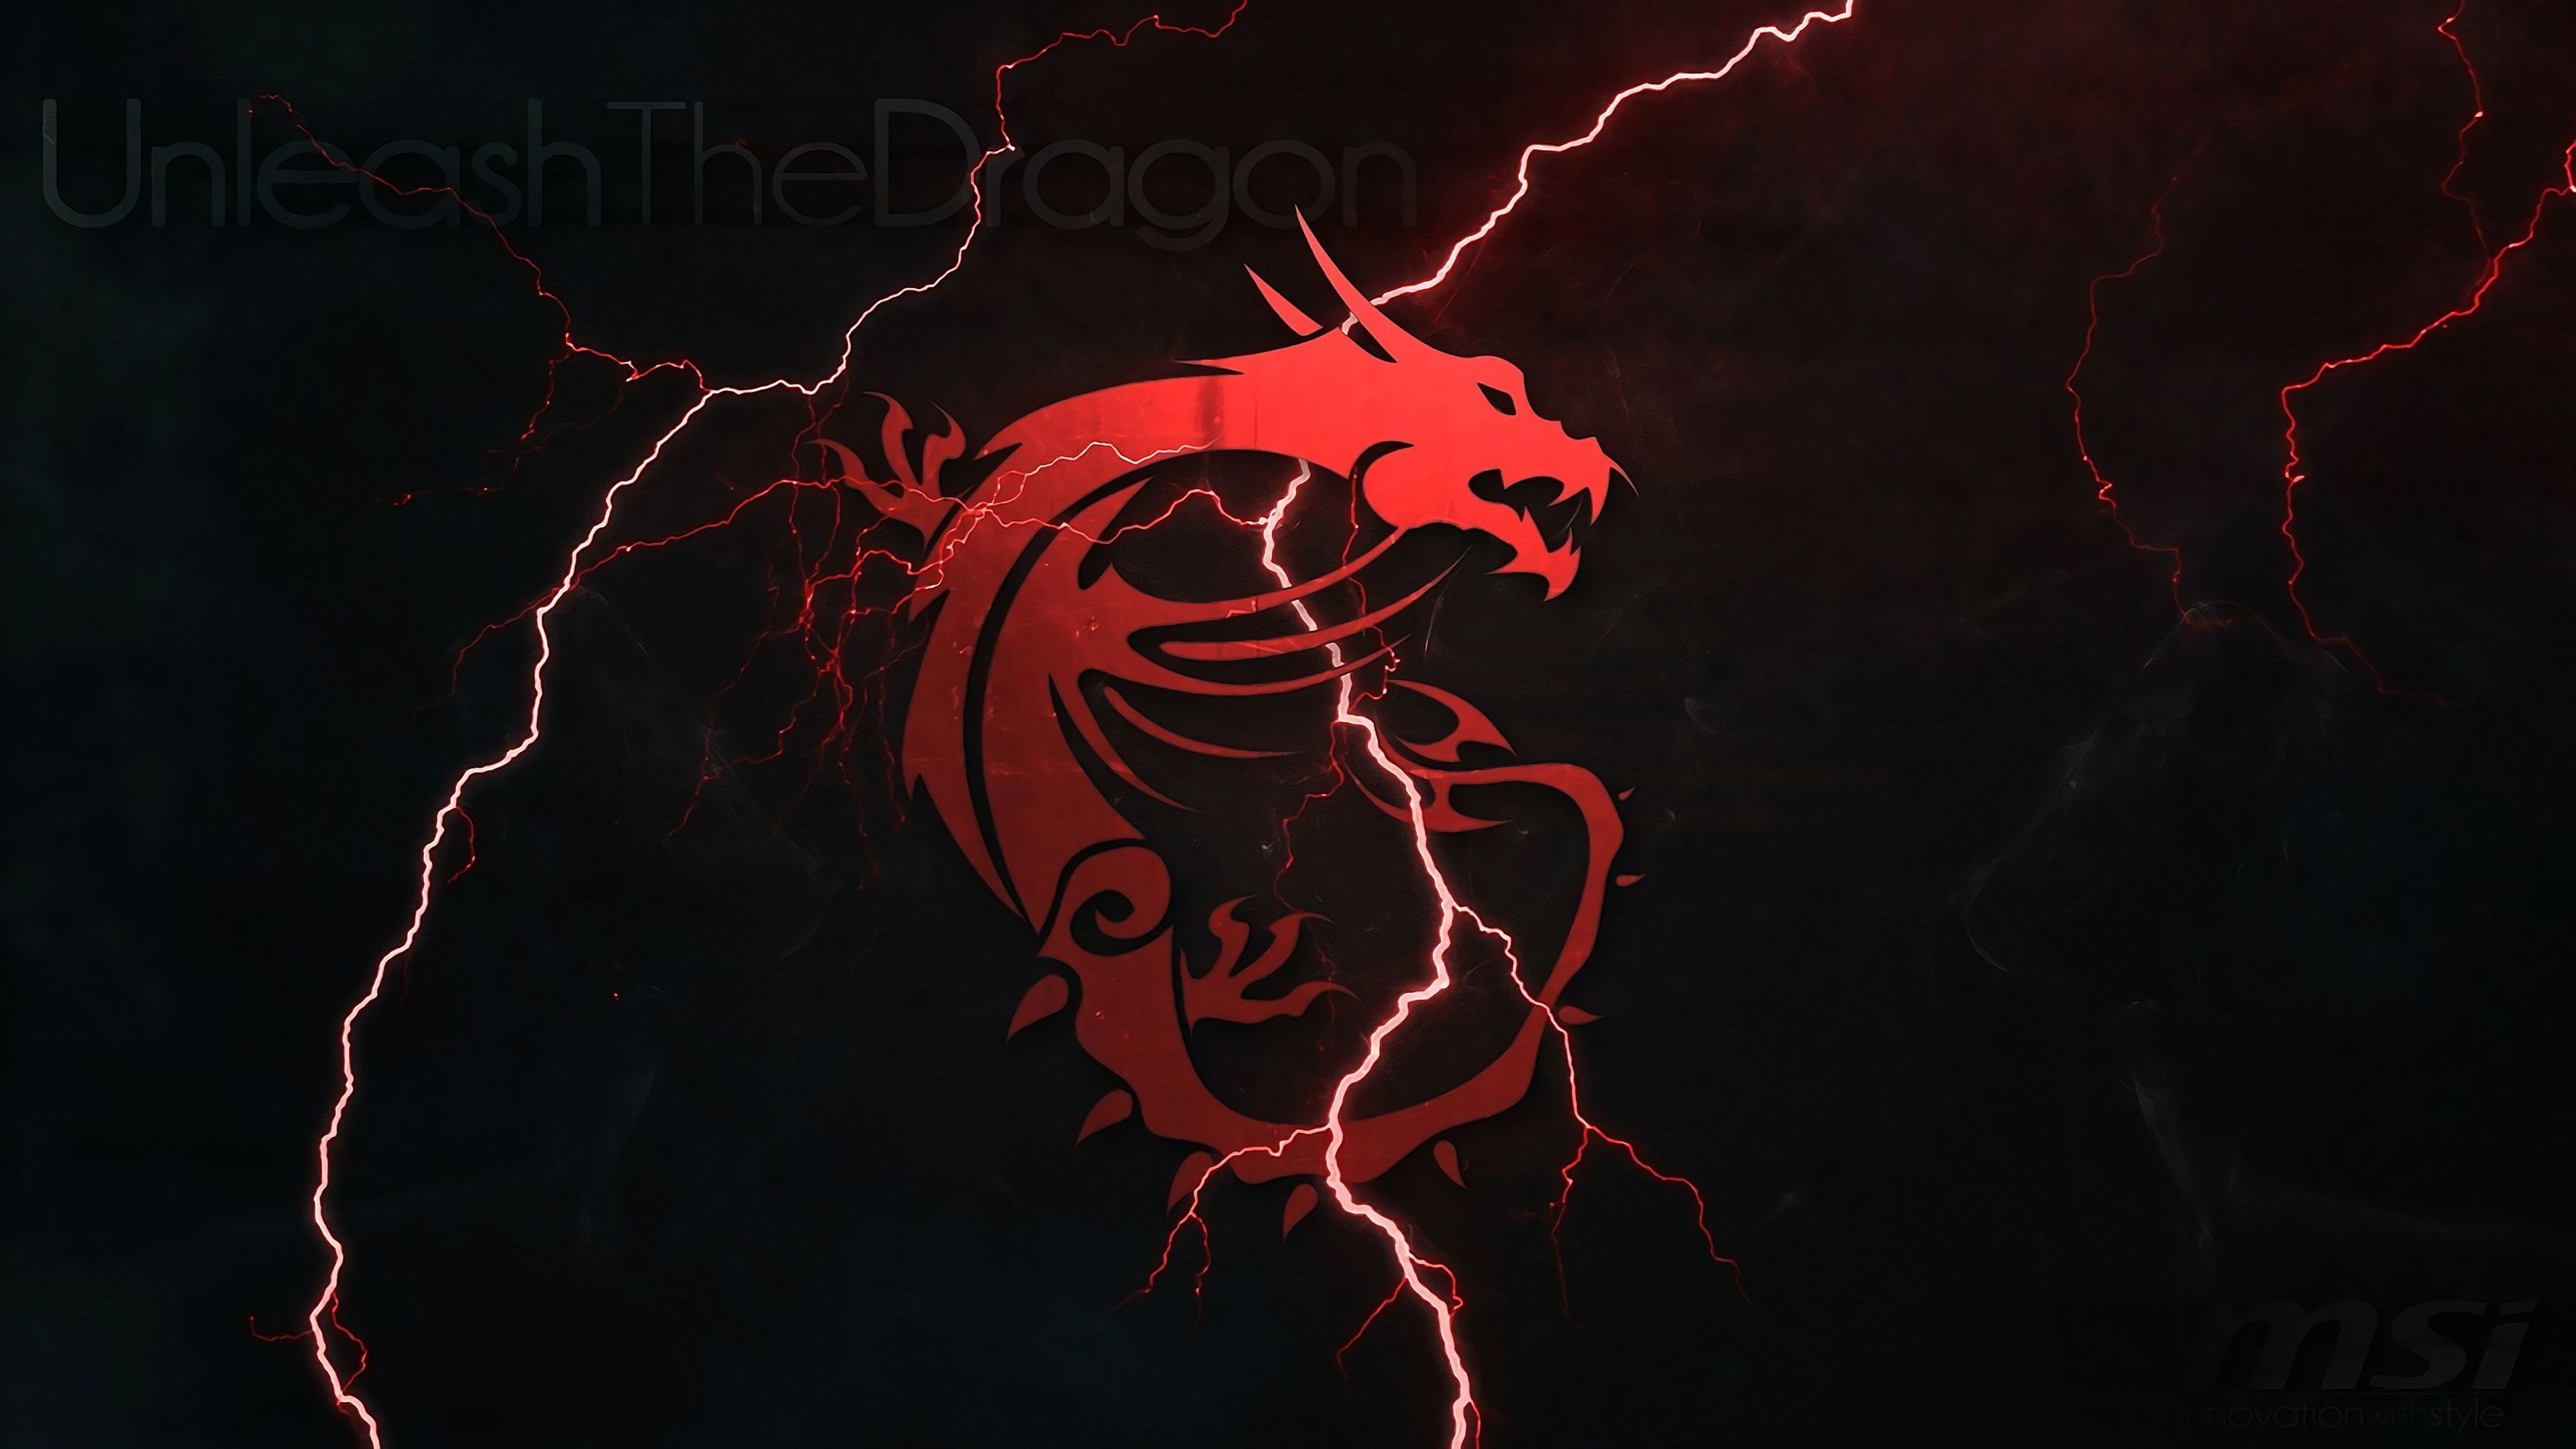 Res: 3840x MSI Dragon Logo Lightning 4k wallpaper. Gaming wallpaper, Dark wallpaper, 3840x2160 wallpaper